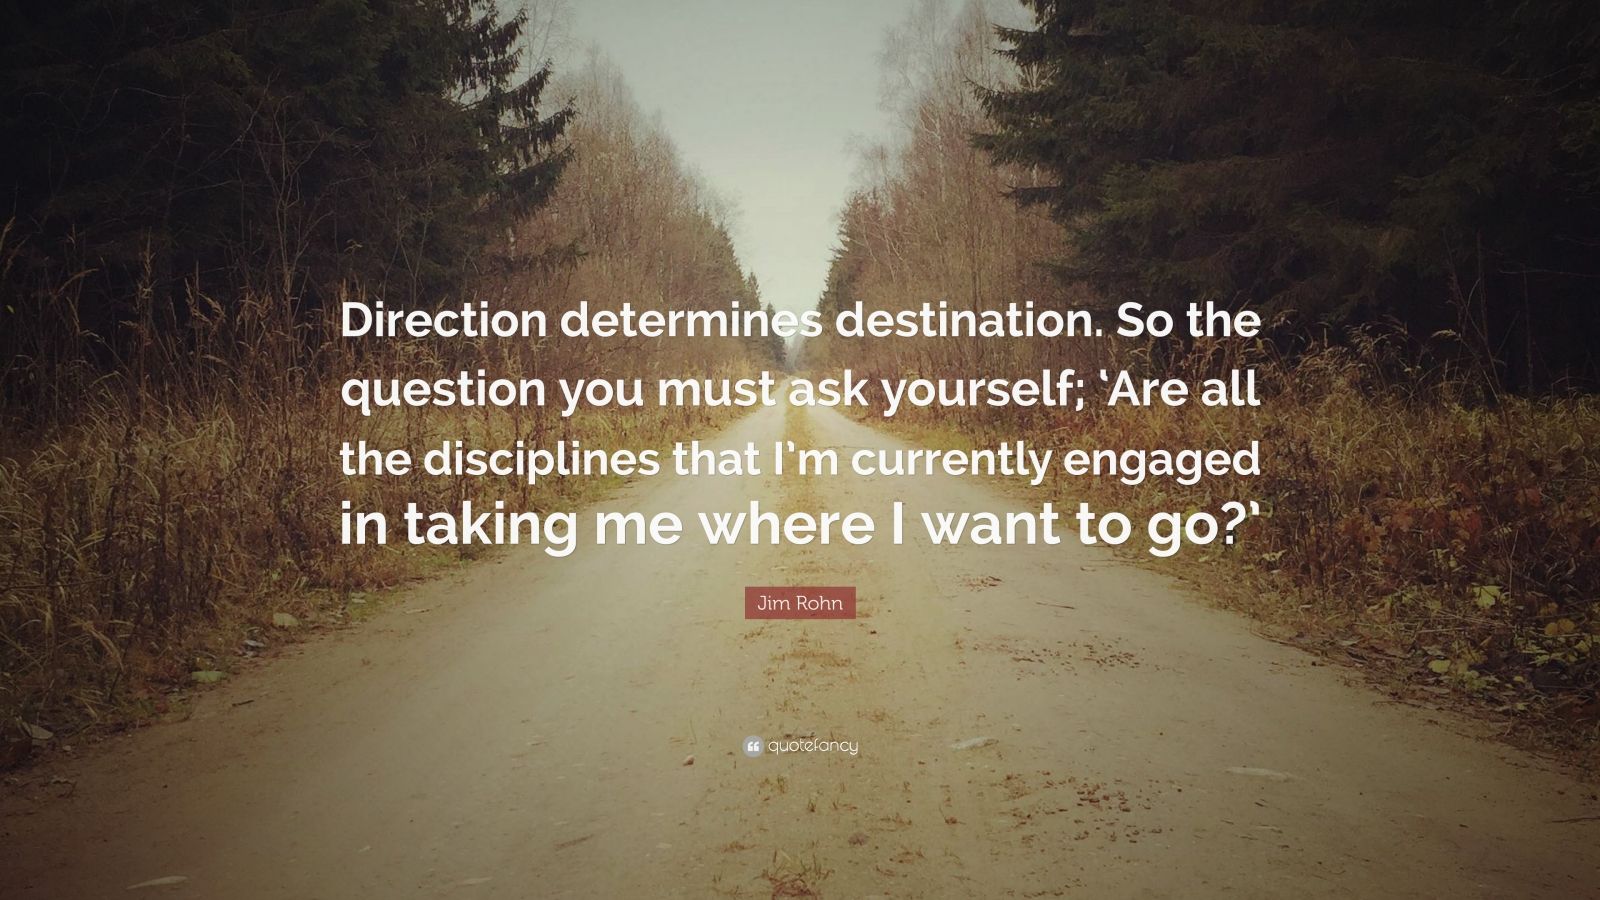 Jim Rohn Quote: “Direction determines destination. So the question you